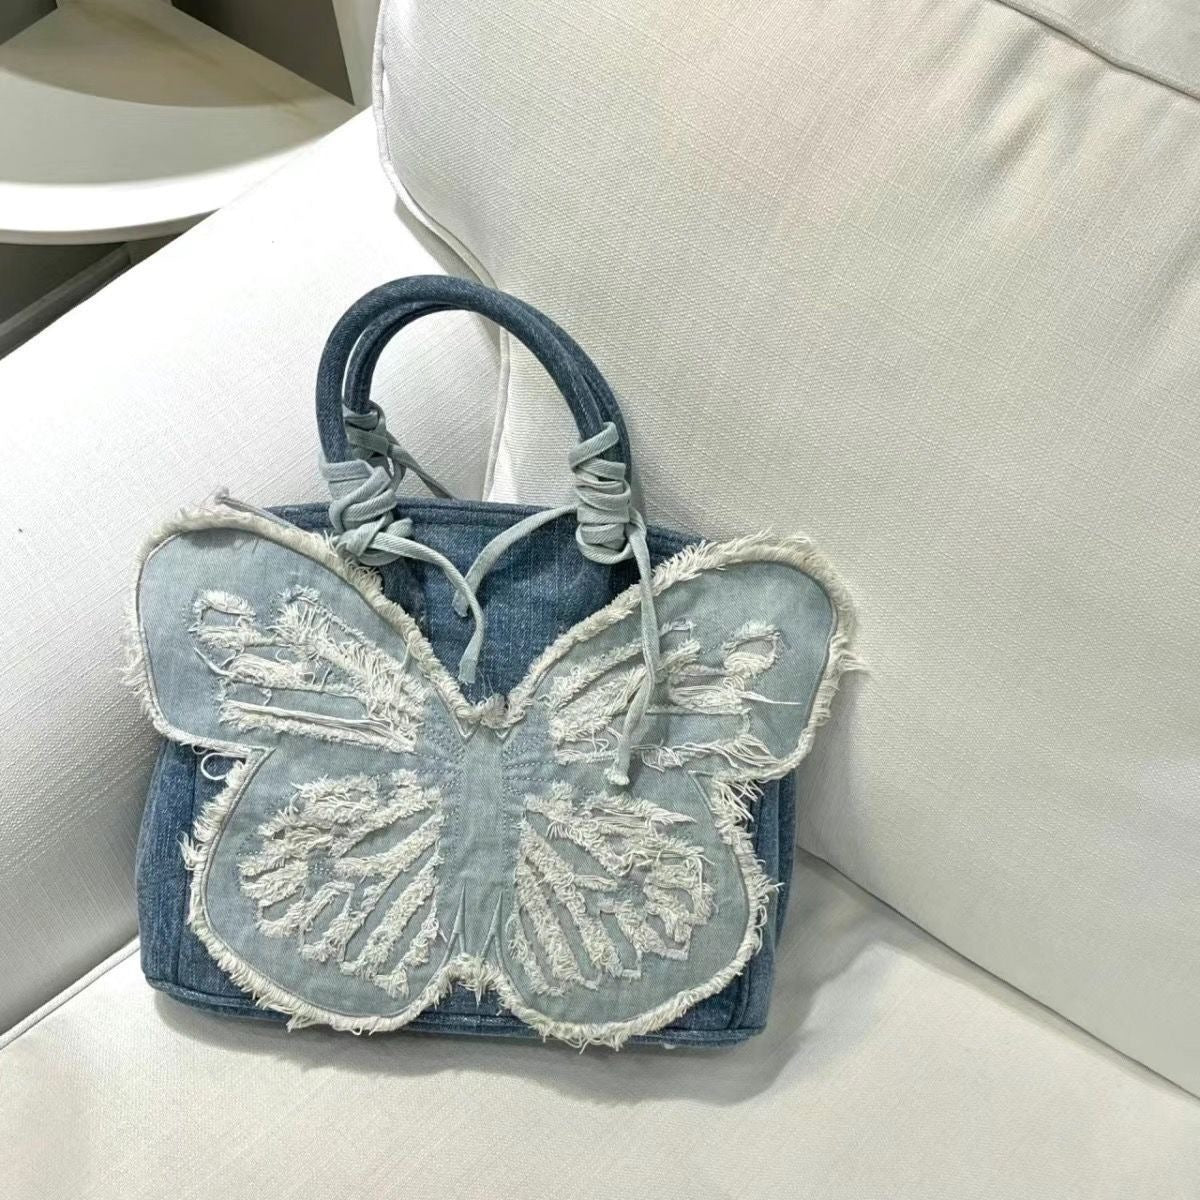 HOOR Embroidered Handbag Blue